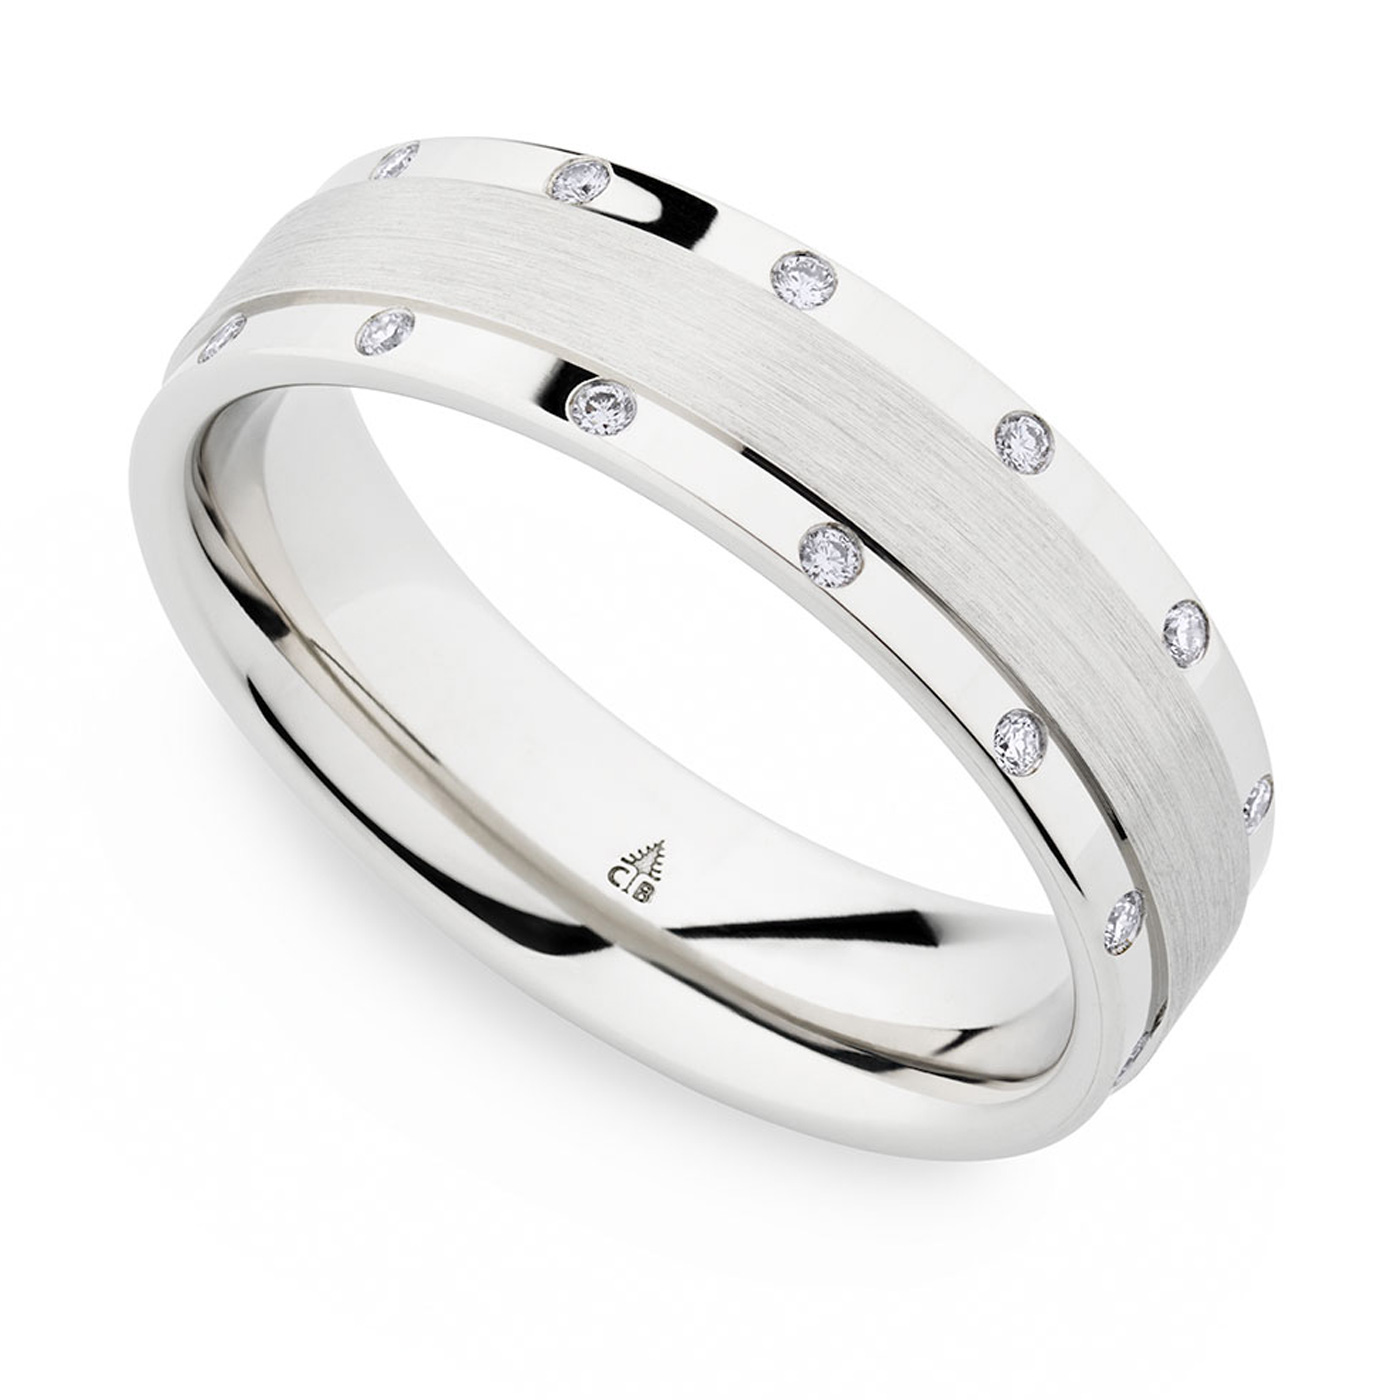 246917 Christian Bauer Platinum Diamond  Wedding Ring / Band